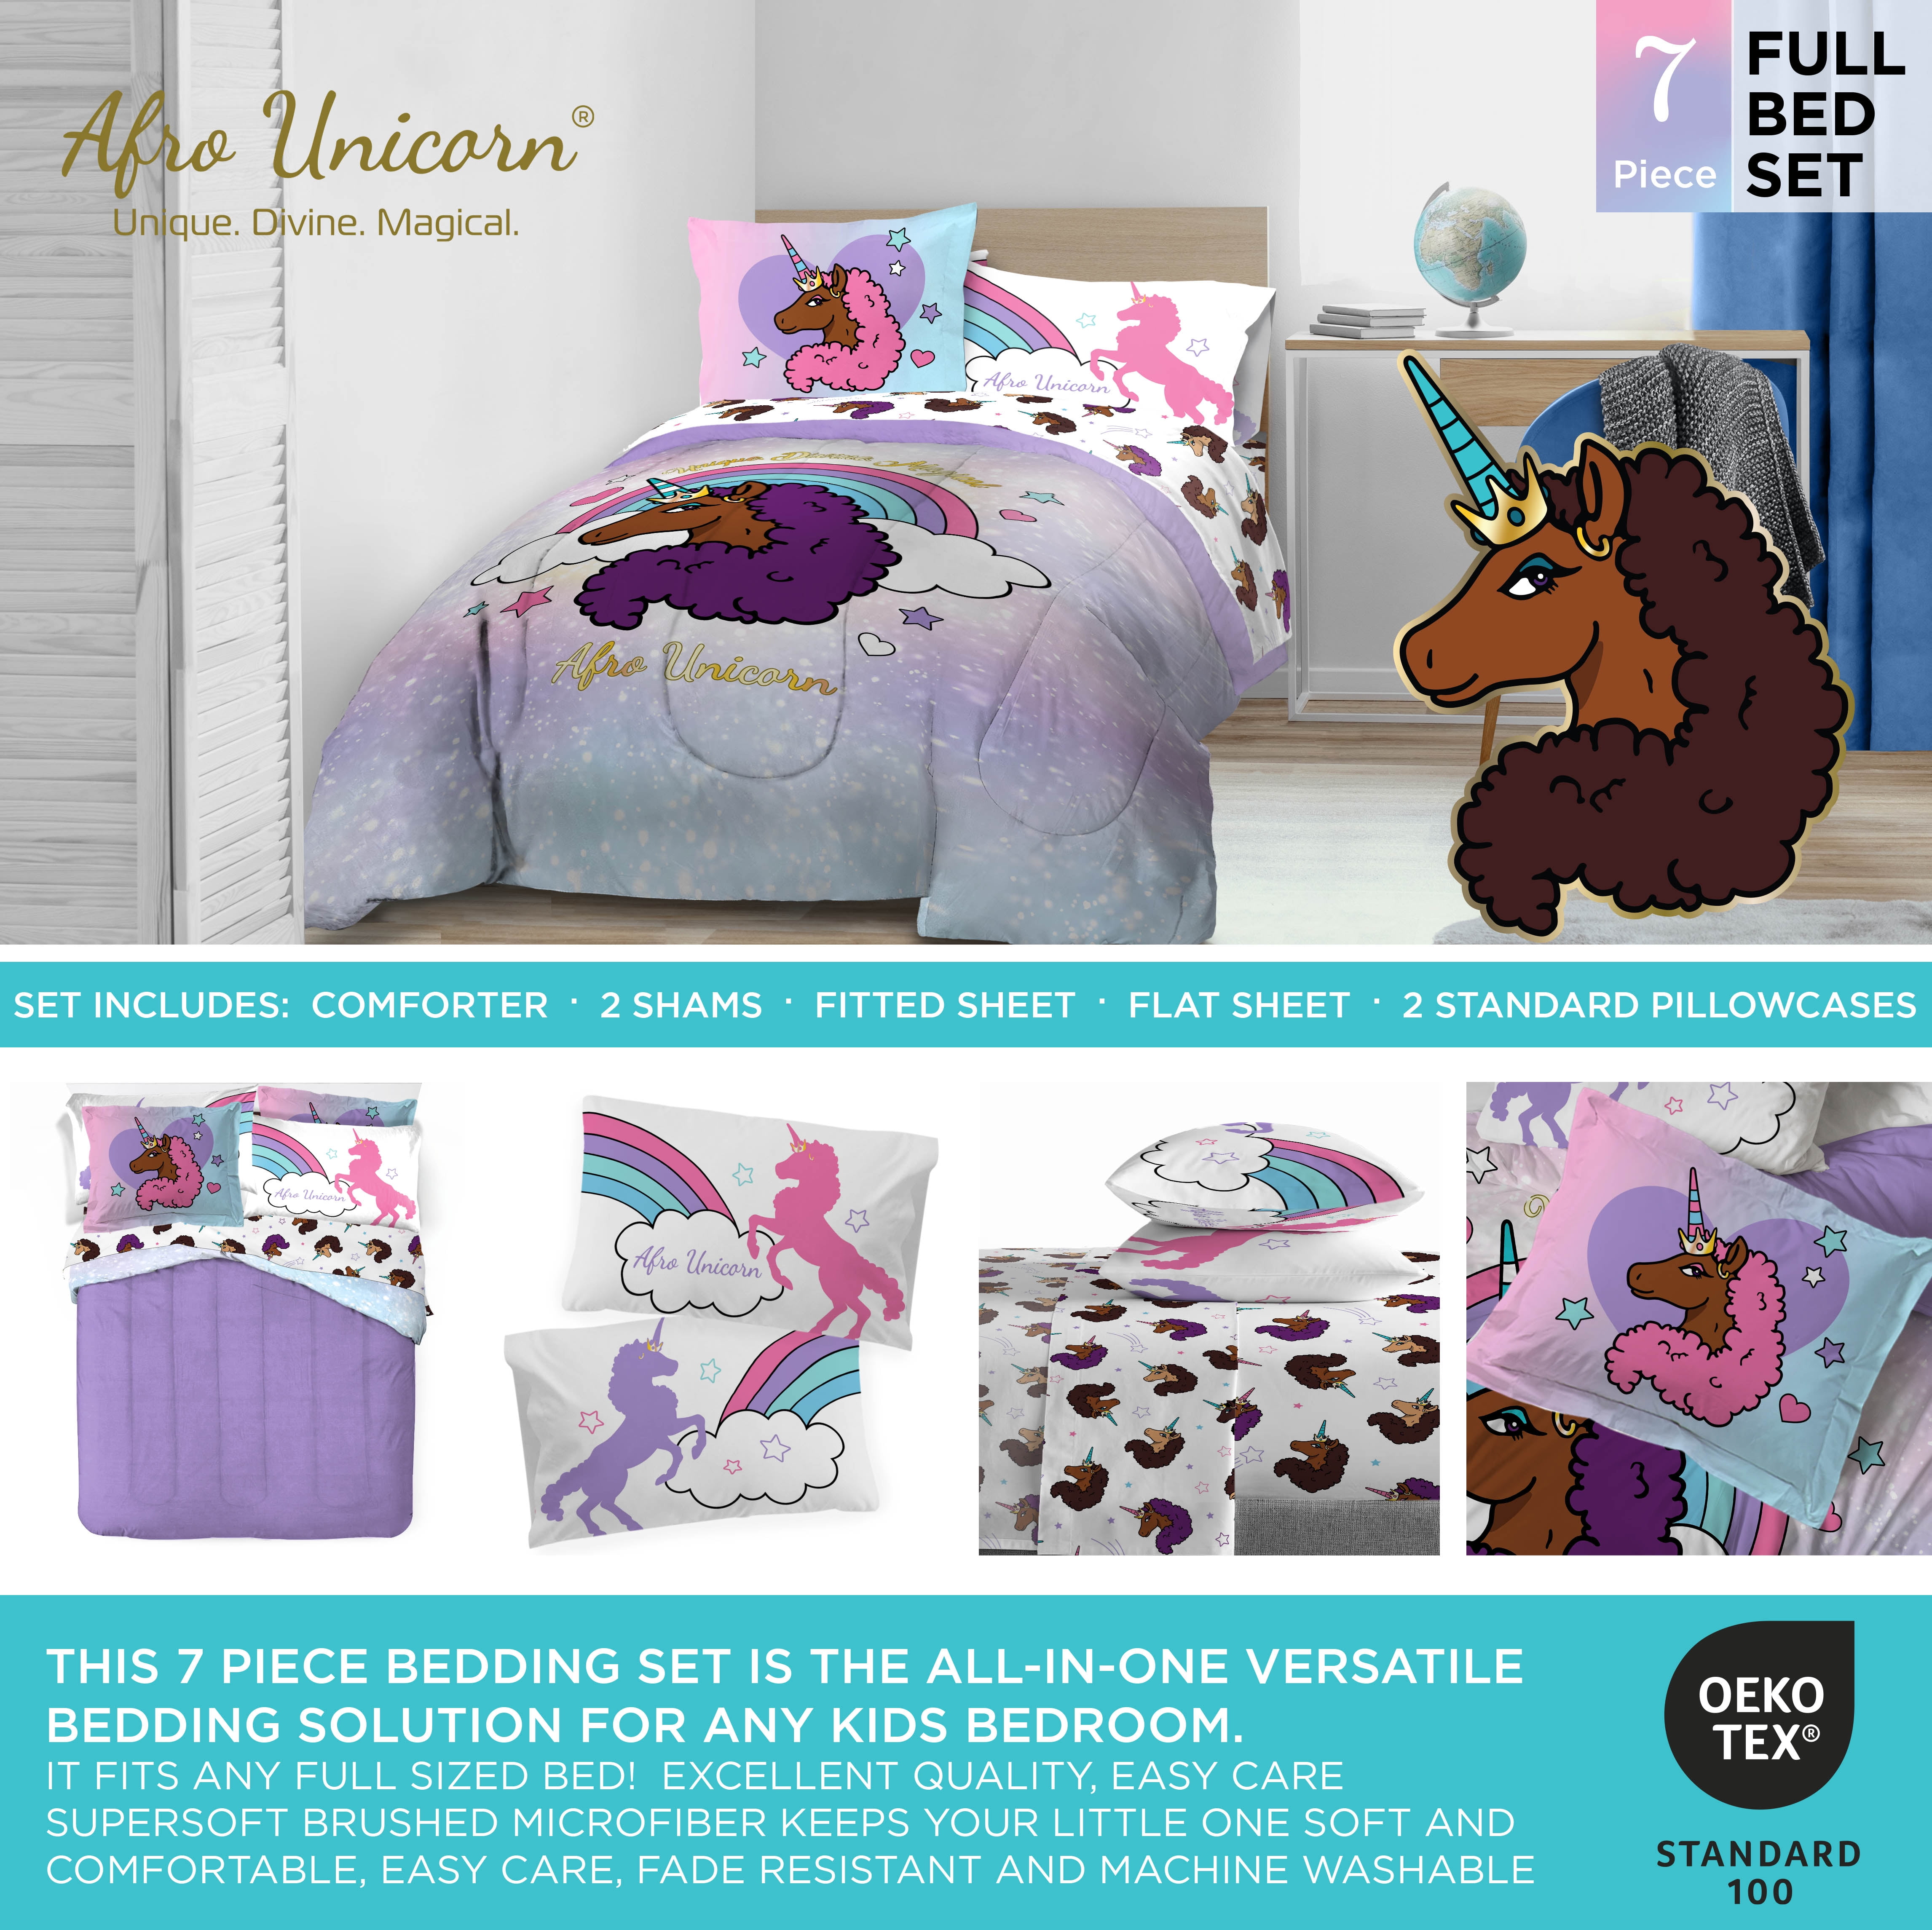 Afro Unicorn Unique, Divine, Magical Blanket - Measures 62 x 90 inches,  Kids Bedding - Fade Resistant Super Soft Fleece (Official Product)